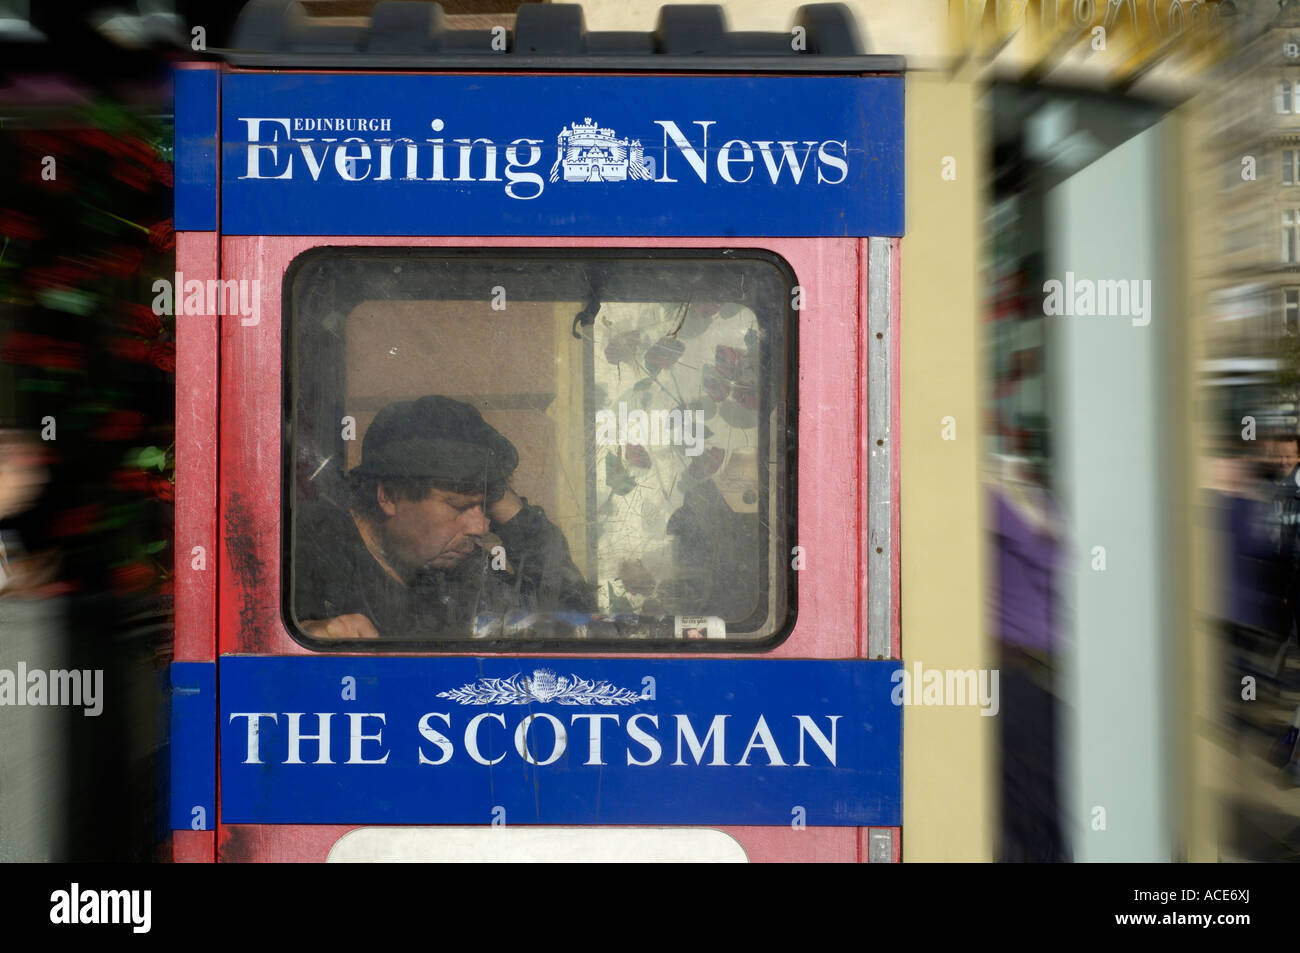 man selling the scotsman and evening news in edinburgh, scotland Stock Photo